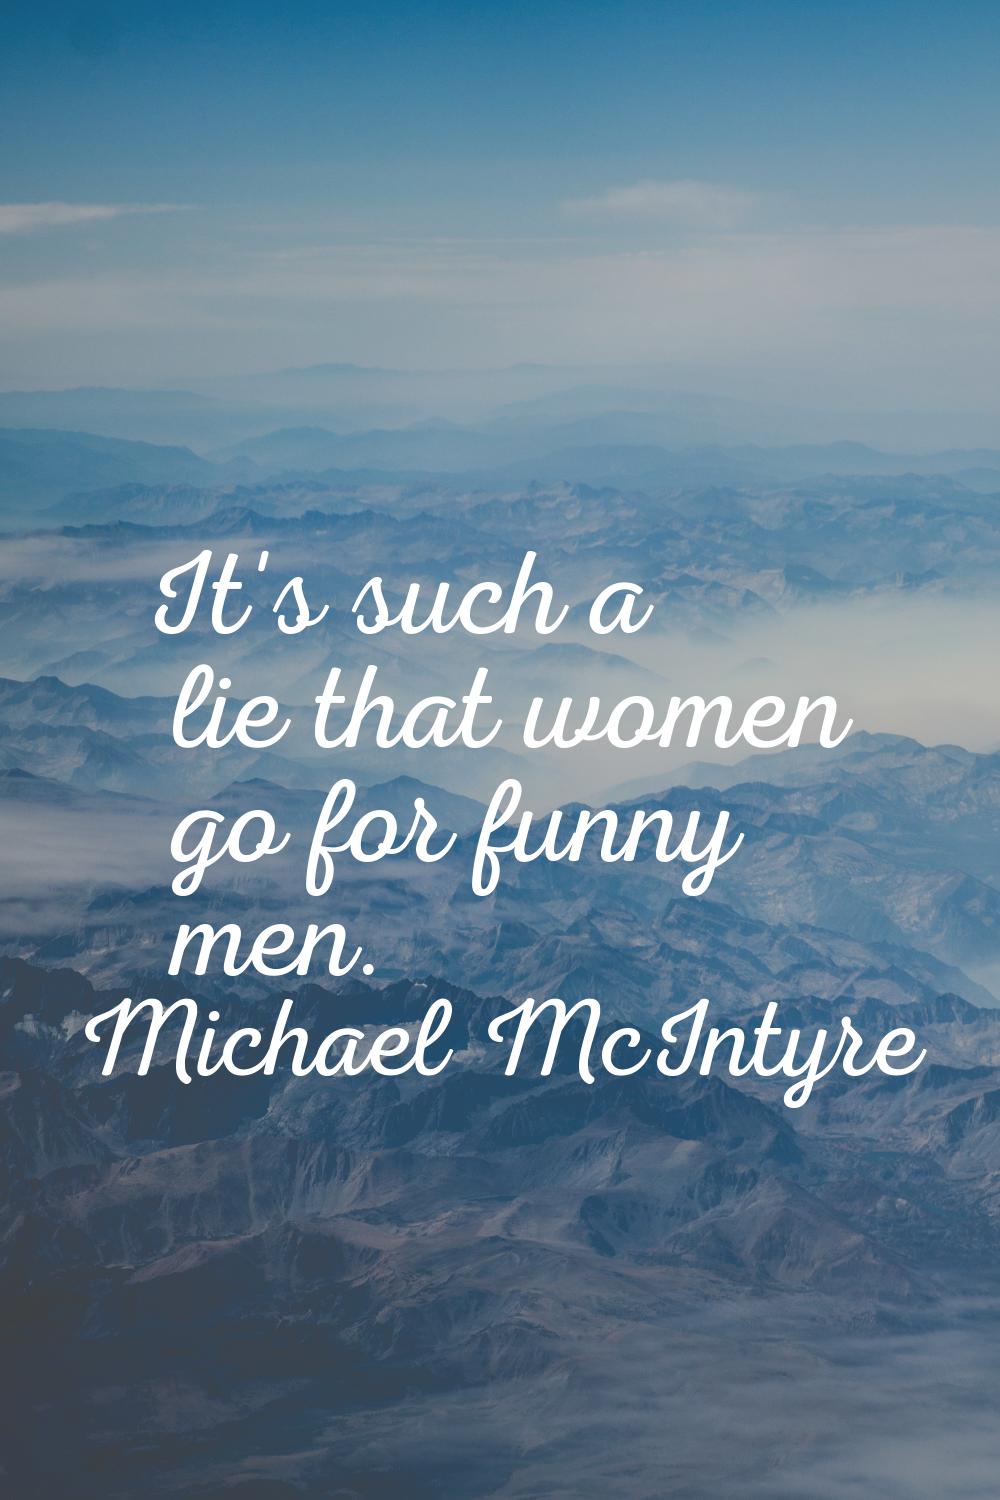 It's such a lie that women go for funny men.